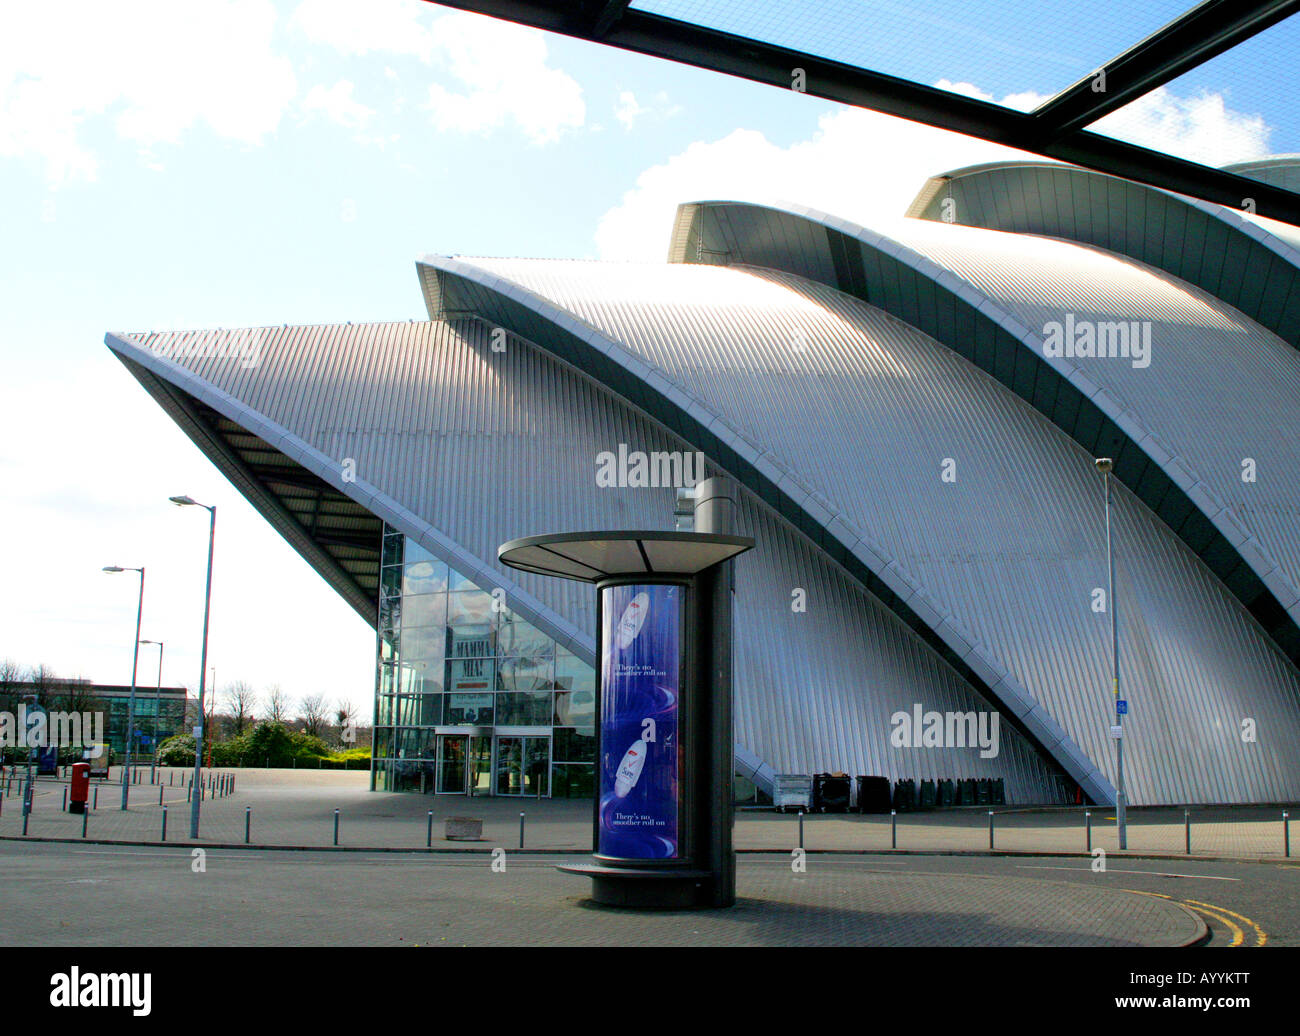 Armadillo Clyde Auditorium,Glasgow Scotland,UK. Stock Photo